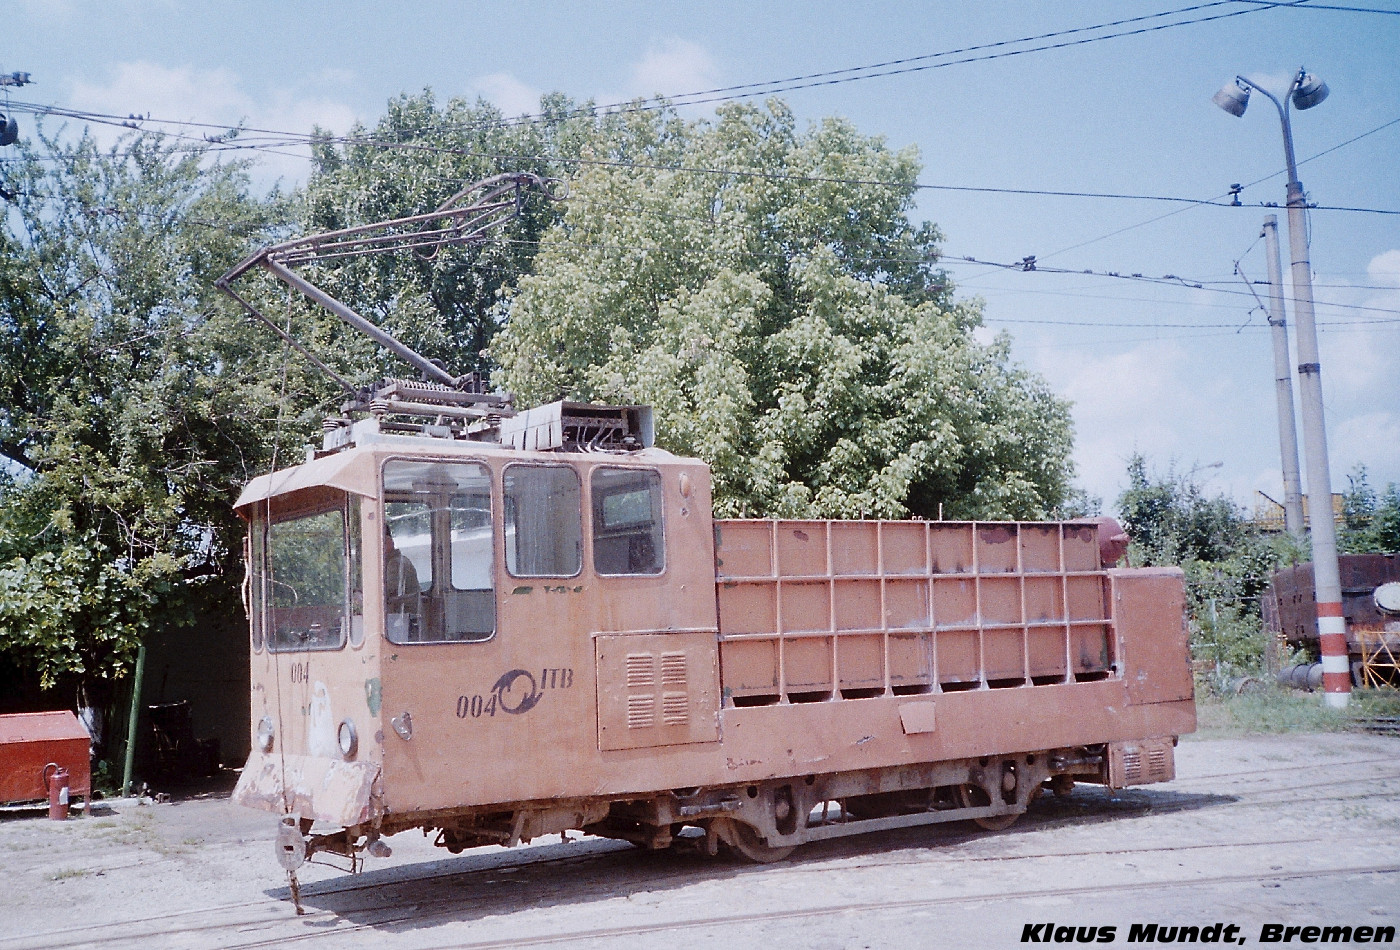 2-axle service tram #004